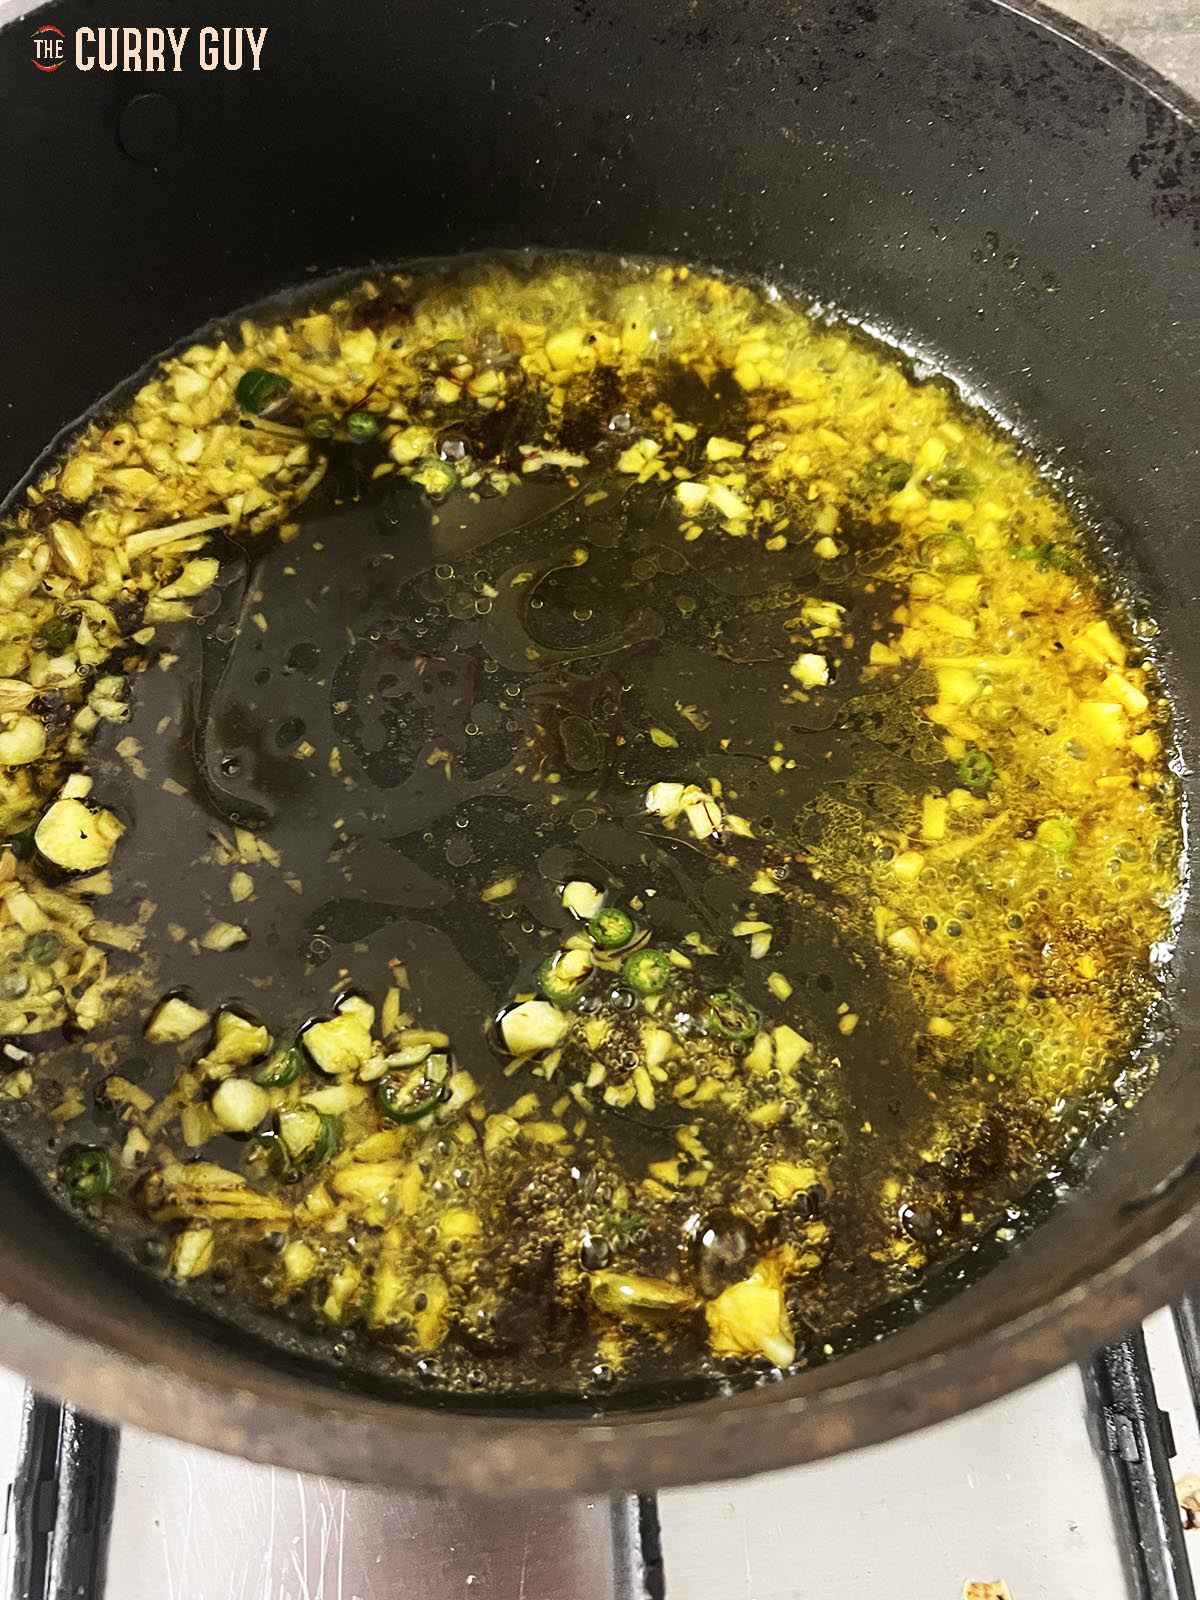 Adding saffron and vinegar to the pan.